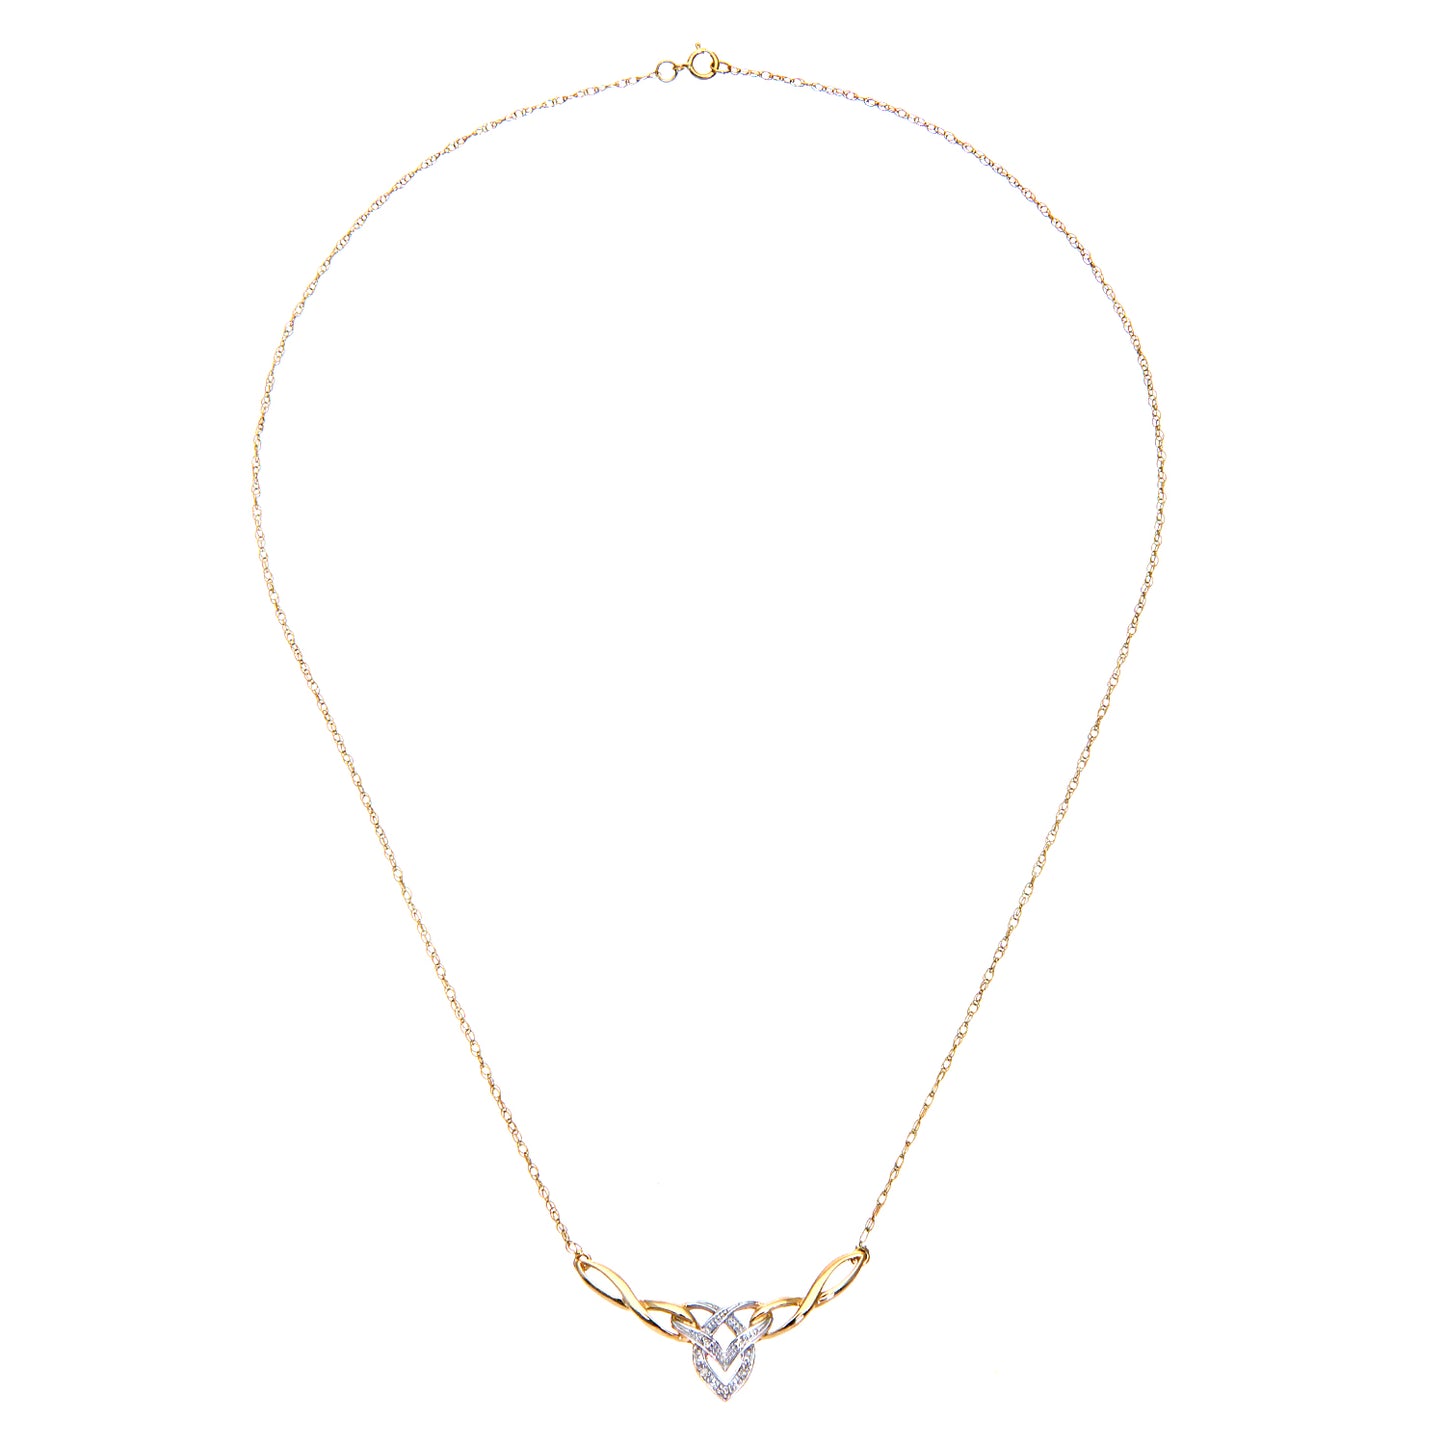 9ct Gold  Round 2pts Diamond Heart Lavalier Necklace 18 inch - PNEAXL01704Y